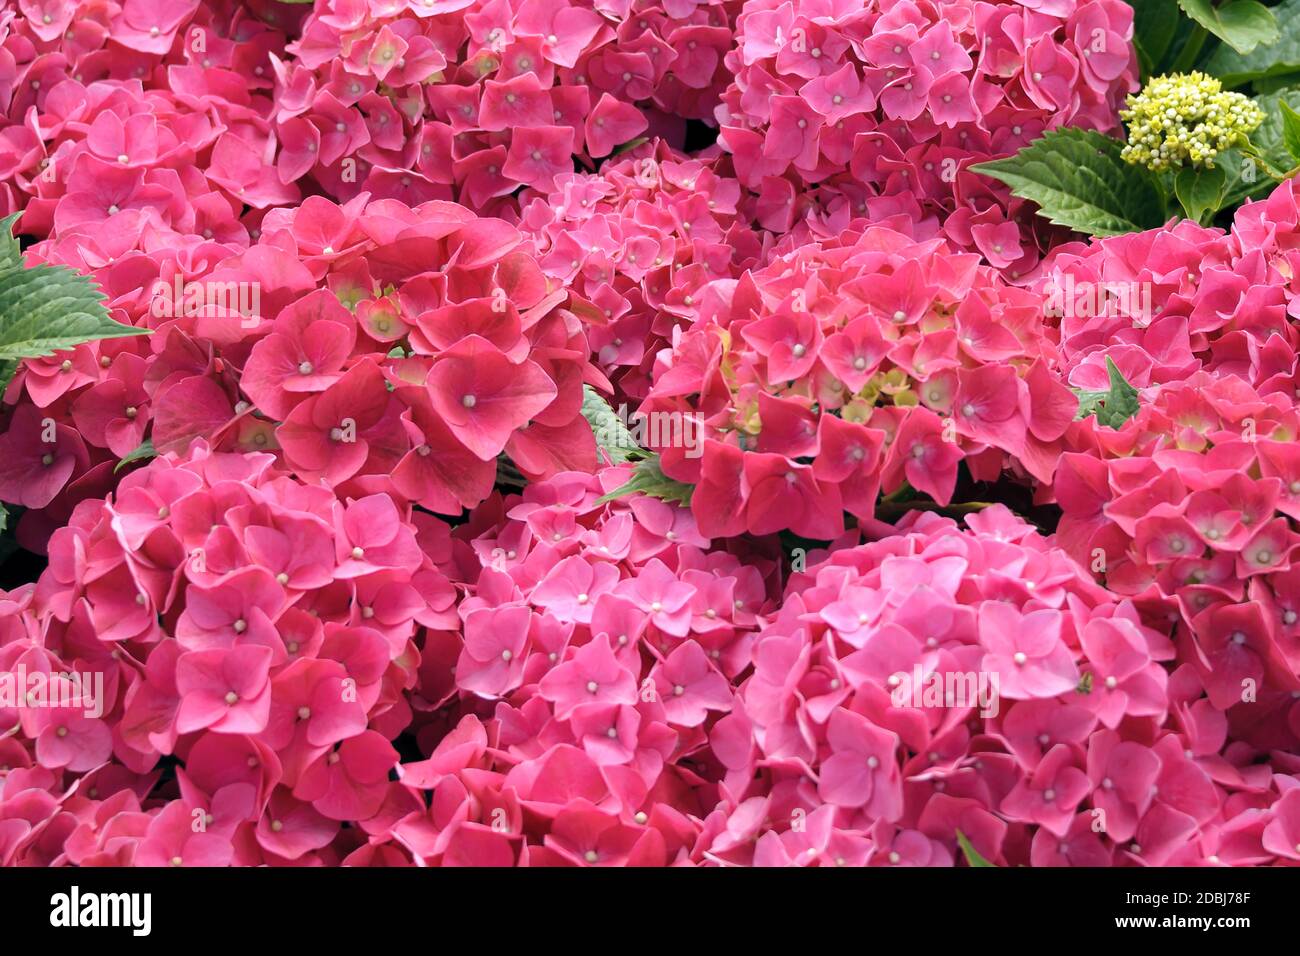 Garten-Hortensie (Hydrangea macrophylla 'Leuchtfeuer') Foto Stock